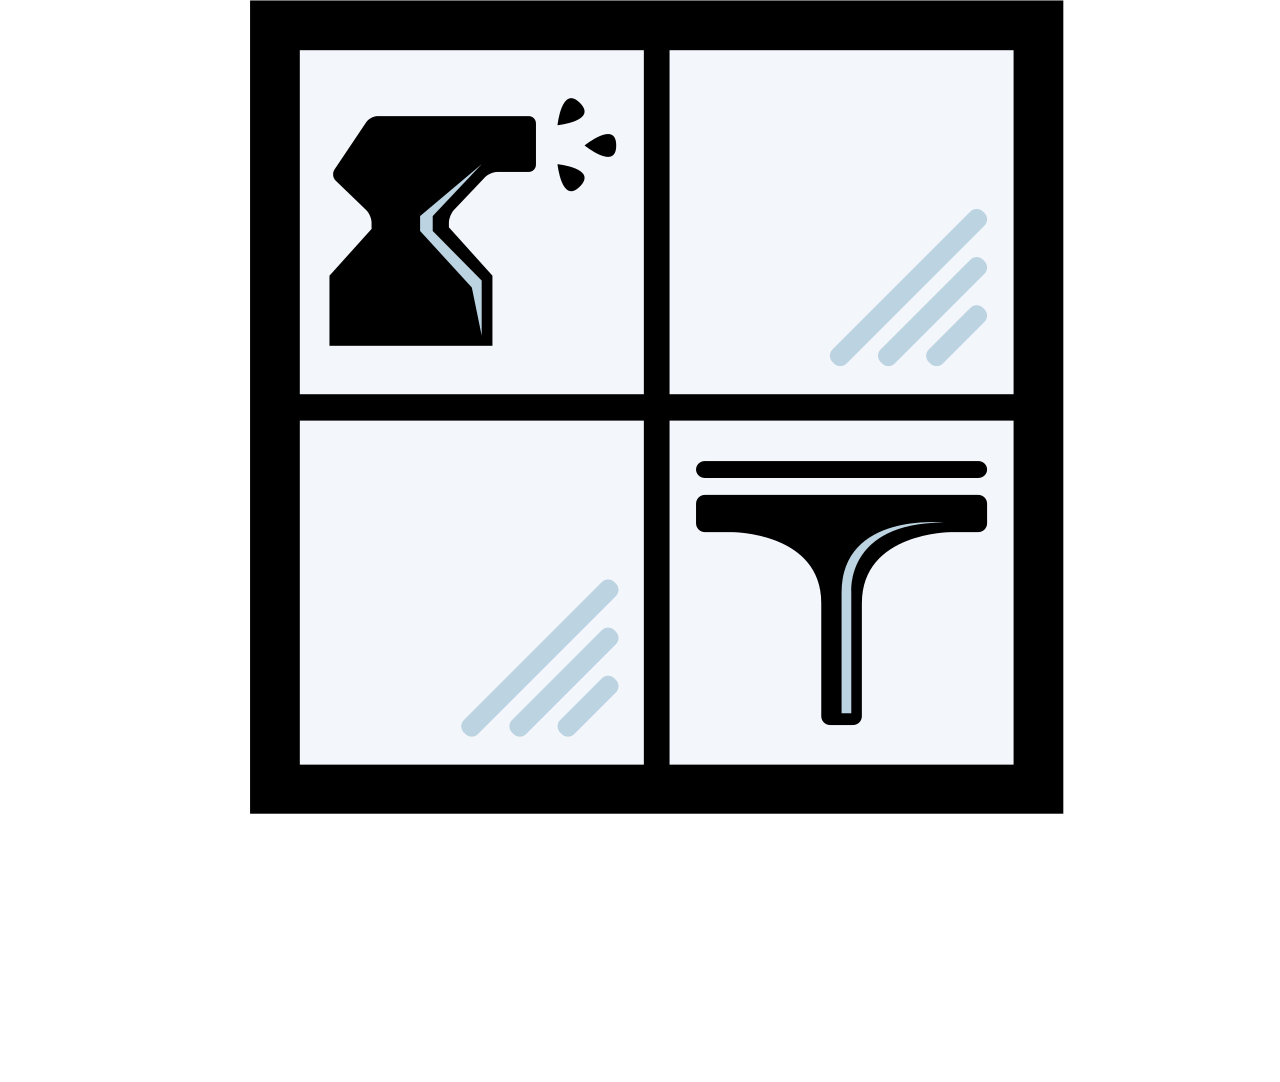 UPLIFT WINDOW WASH 
SERVICE 's logo